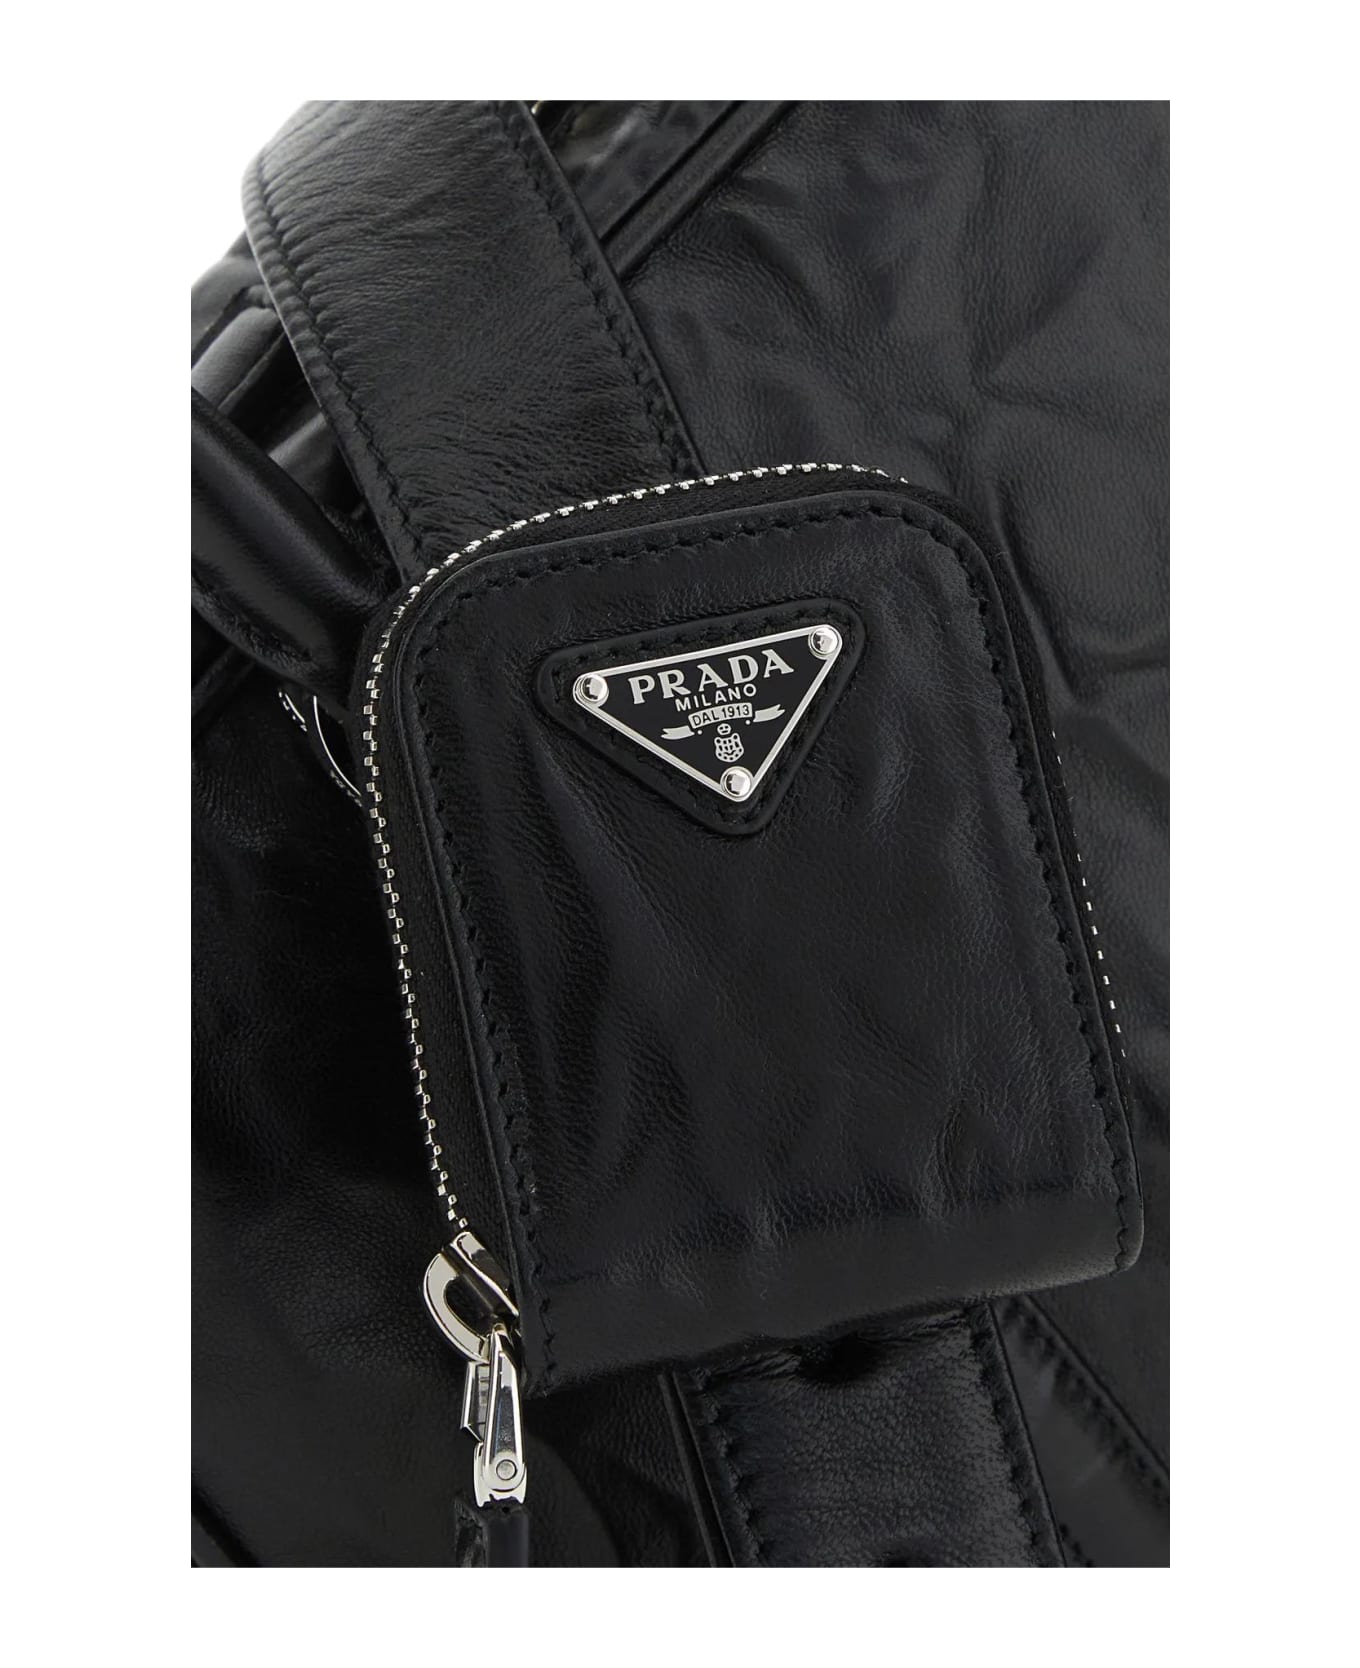 Prada Black Nappa Leather Handbag